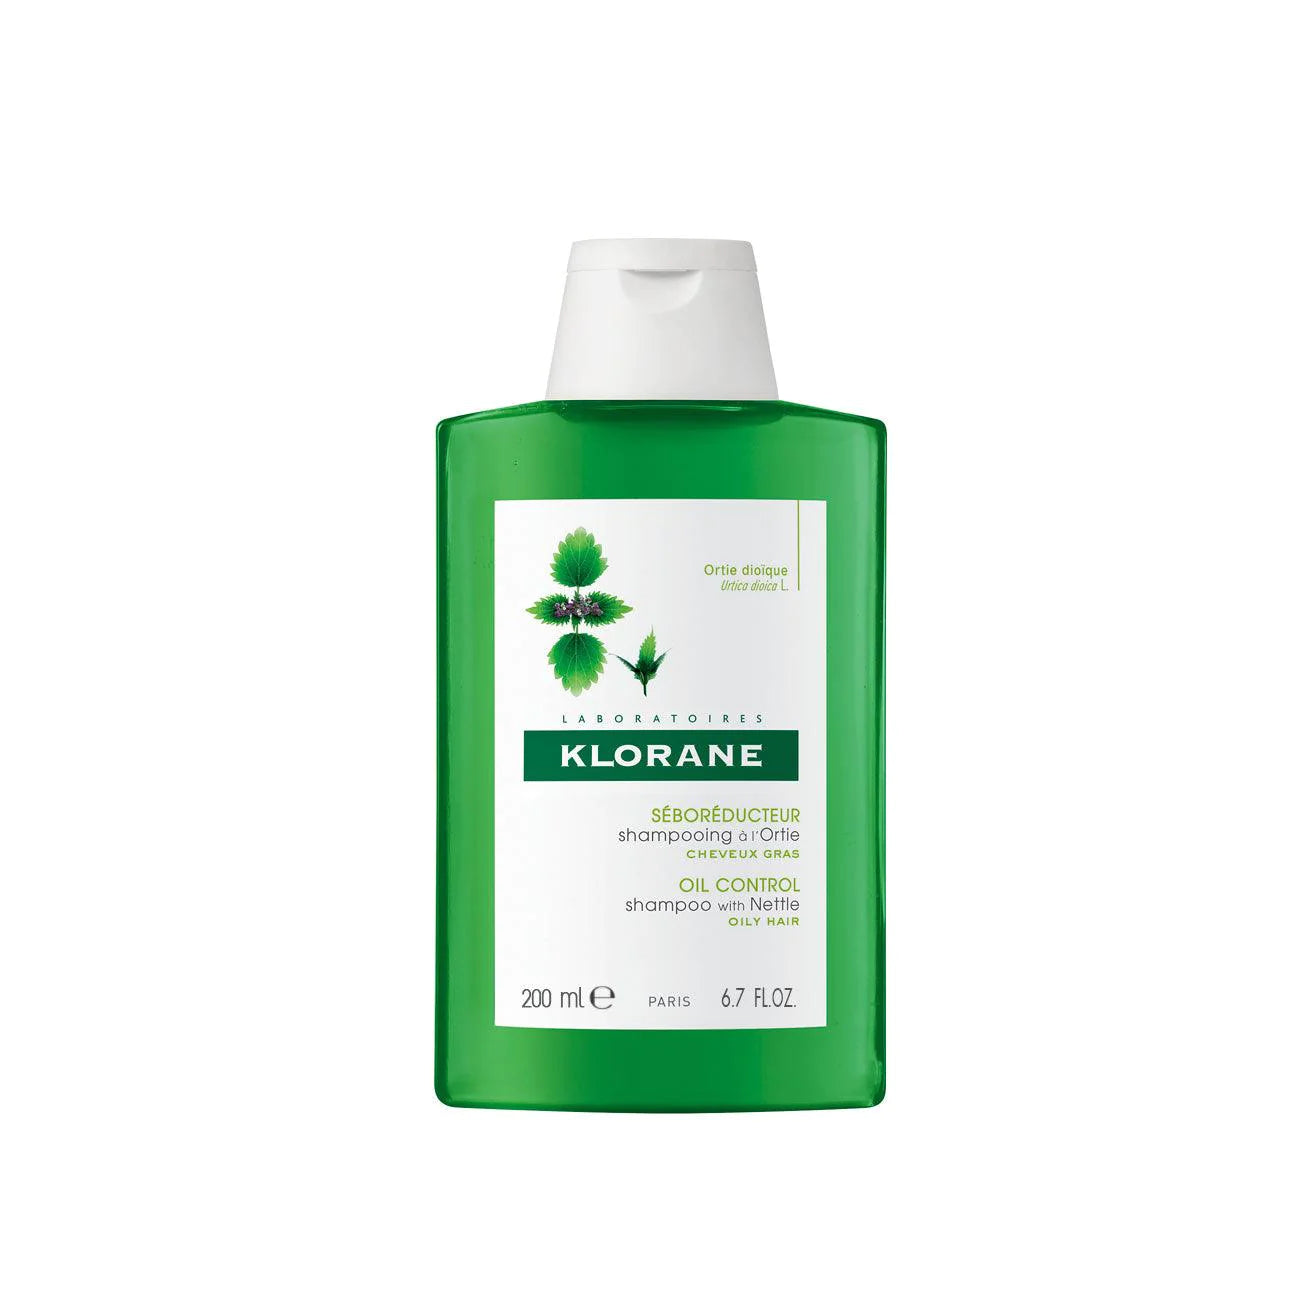 KLORANE Oil Control Shampoo with Nettle - Oily Hair 200ml